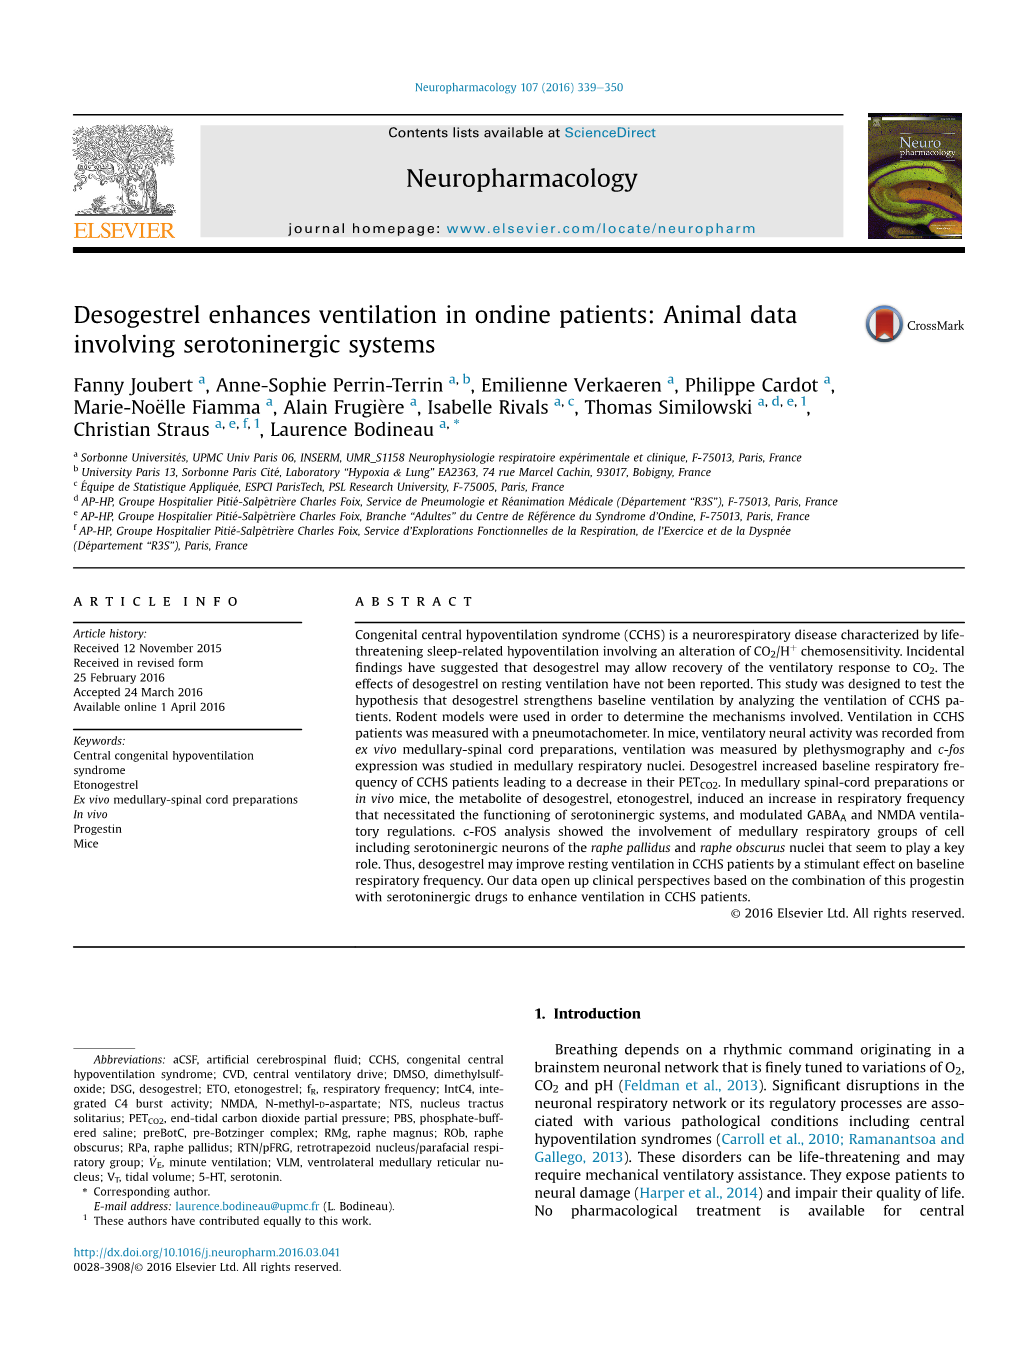 Desogestrel Enhances Ventilation in Ondine Patients: Animal Data Involving Serotoninergic Systems